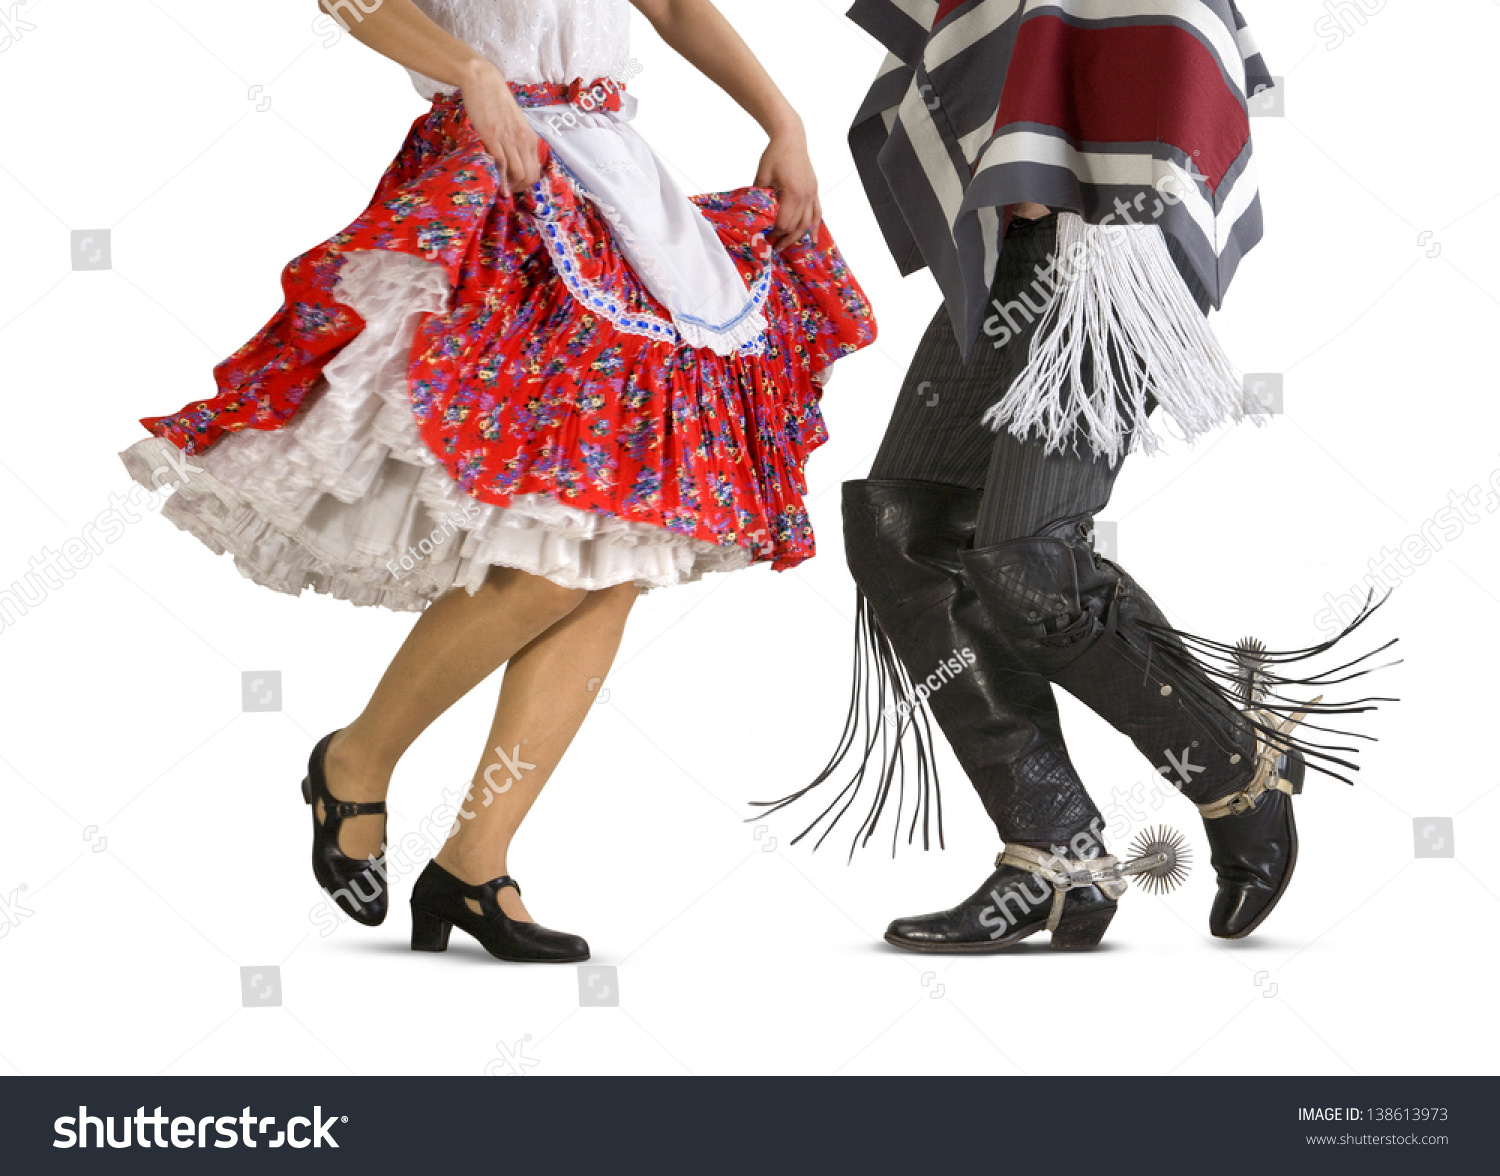 PowerPoint Template folk dance chilean typical cueca (ikpnikuok)